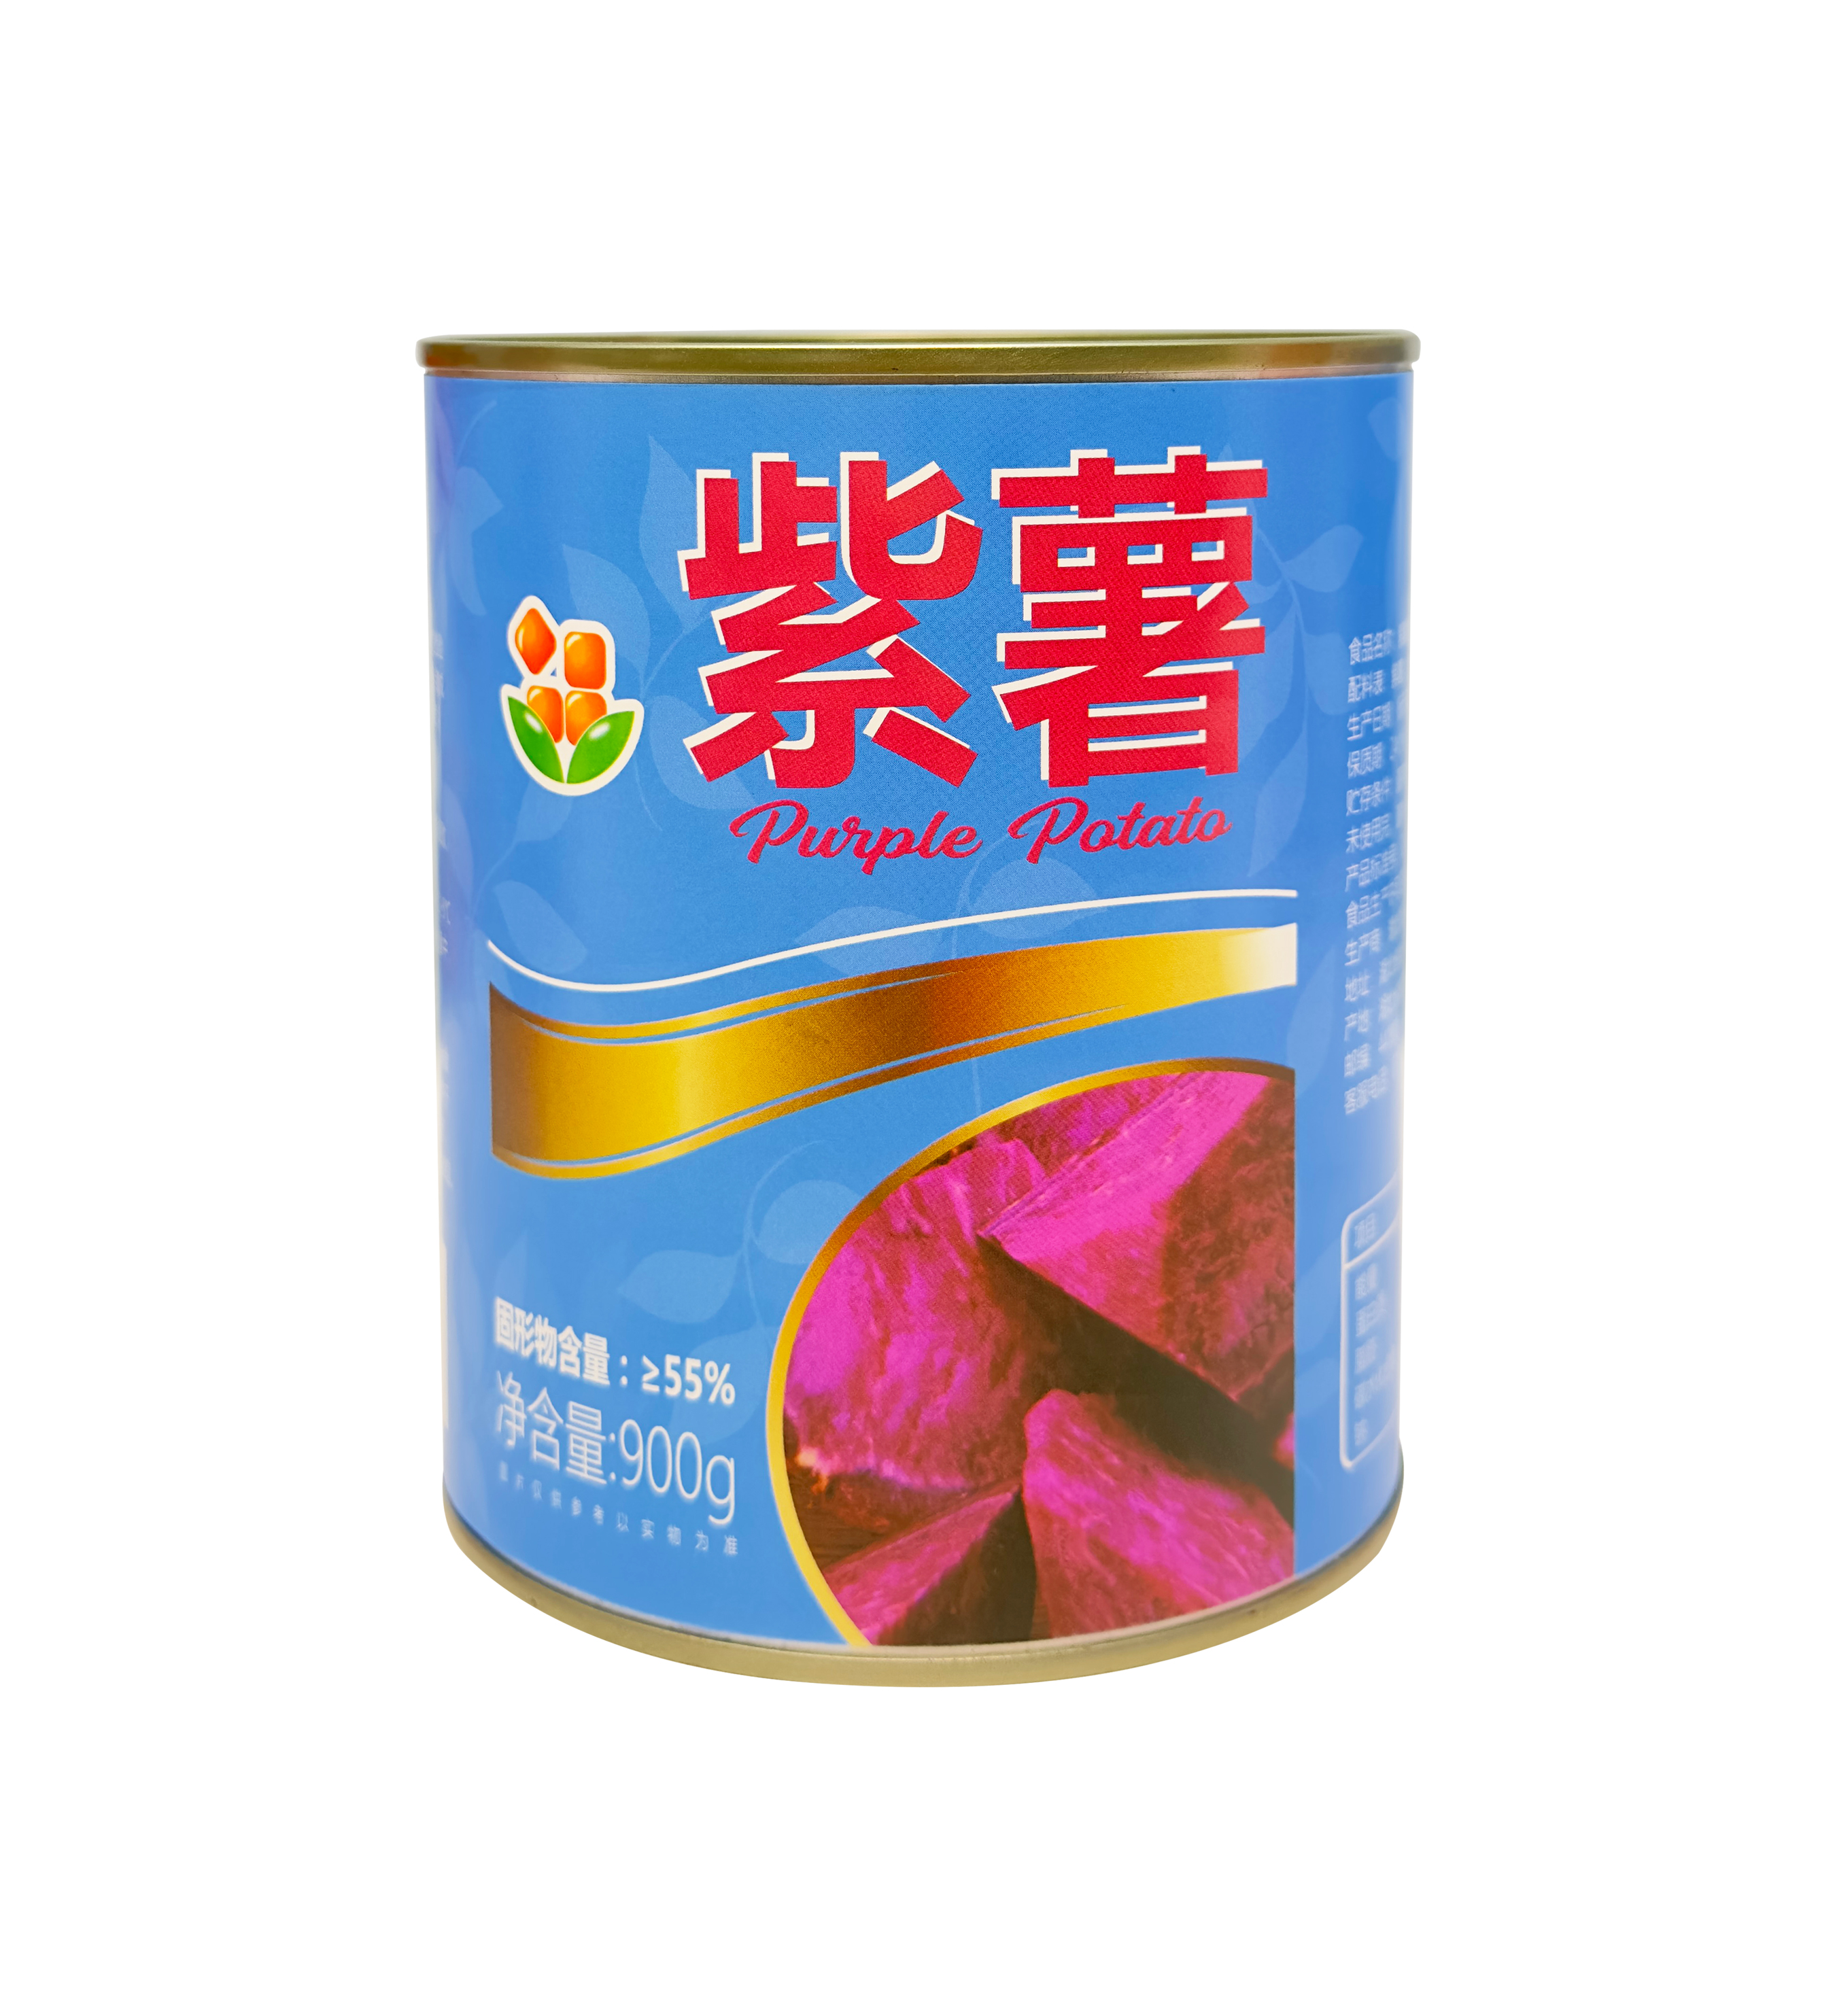 Canned purple potato